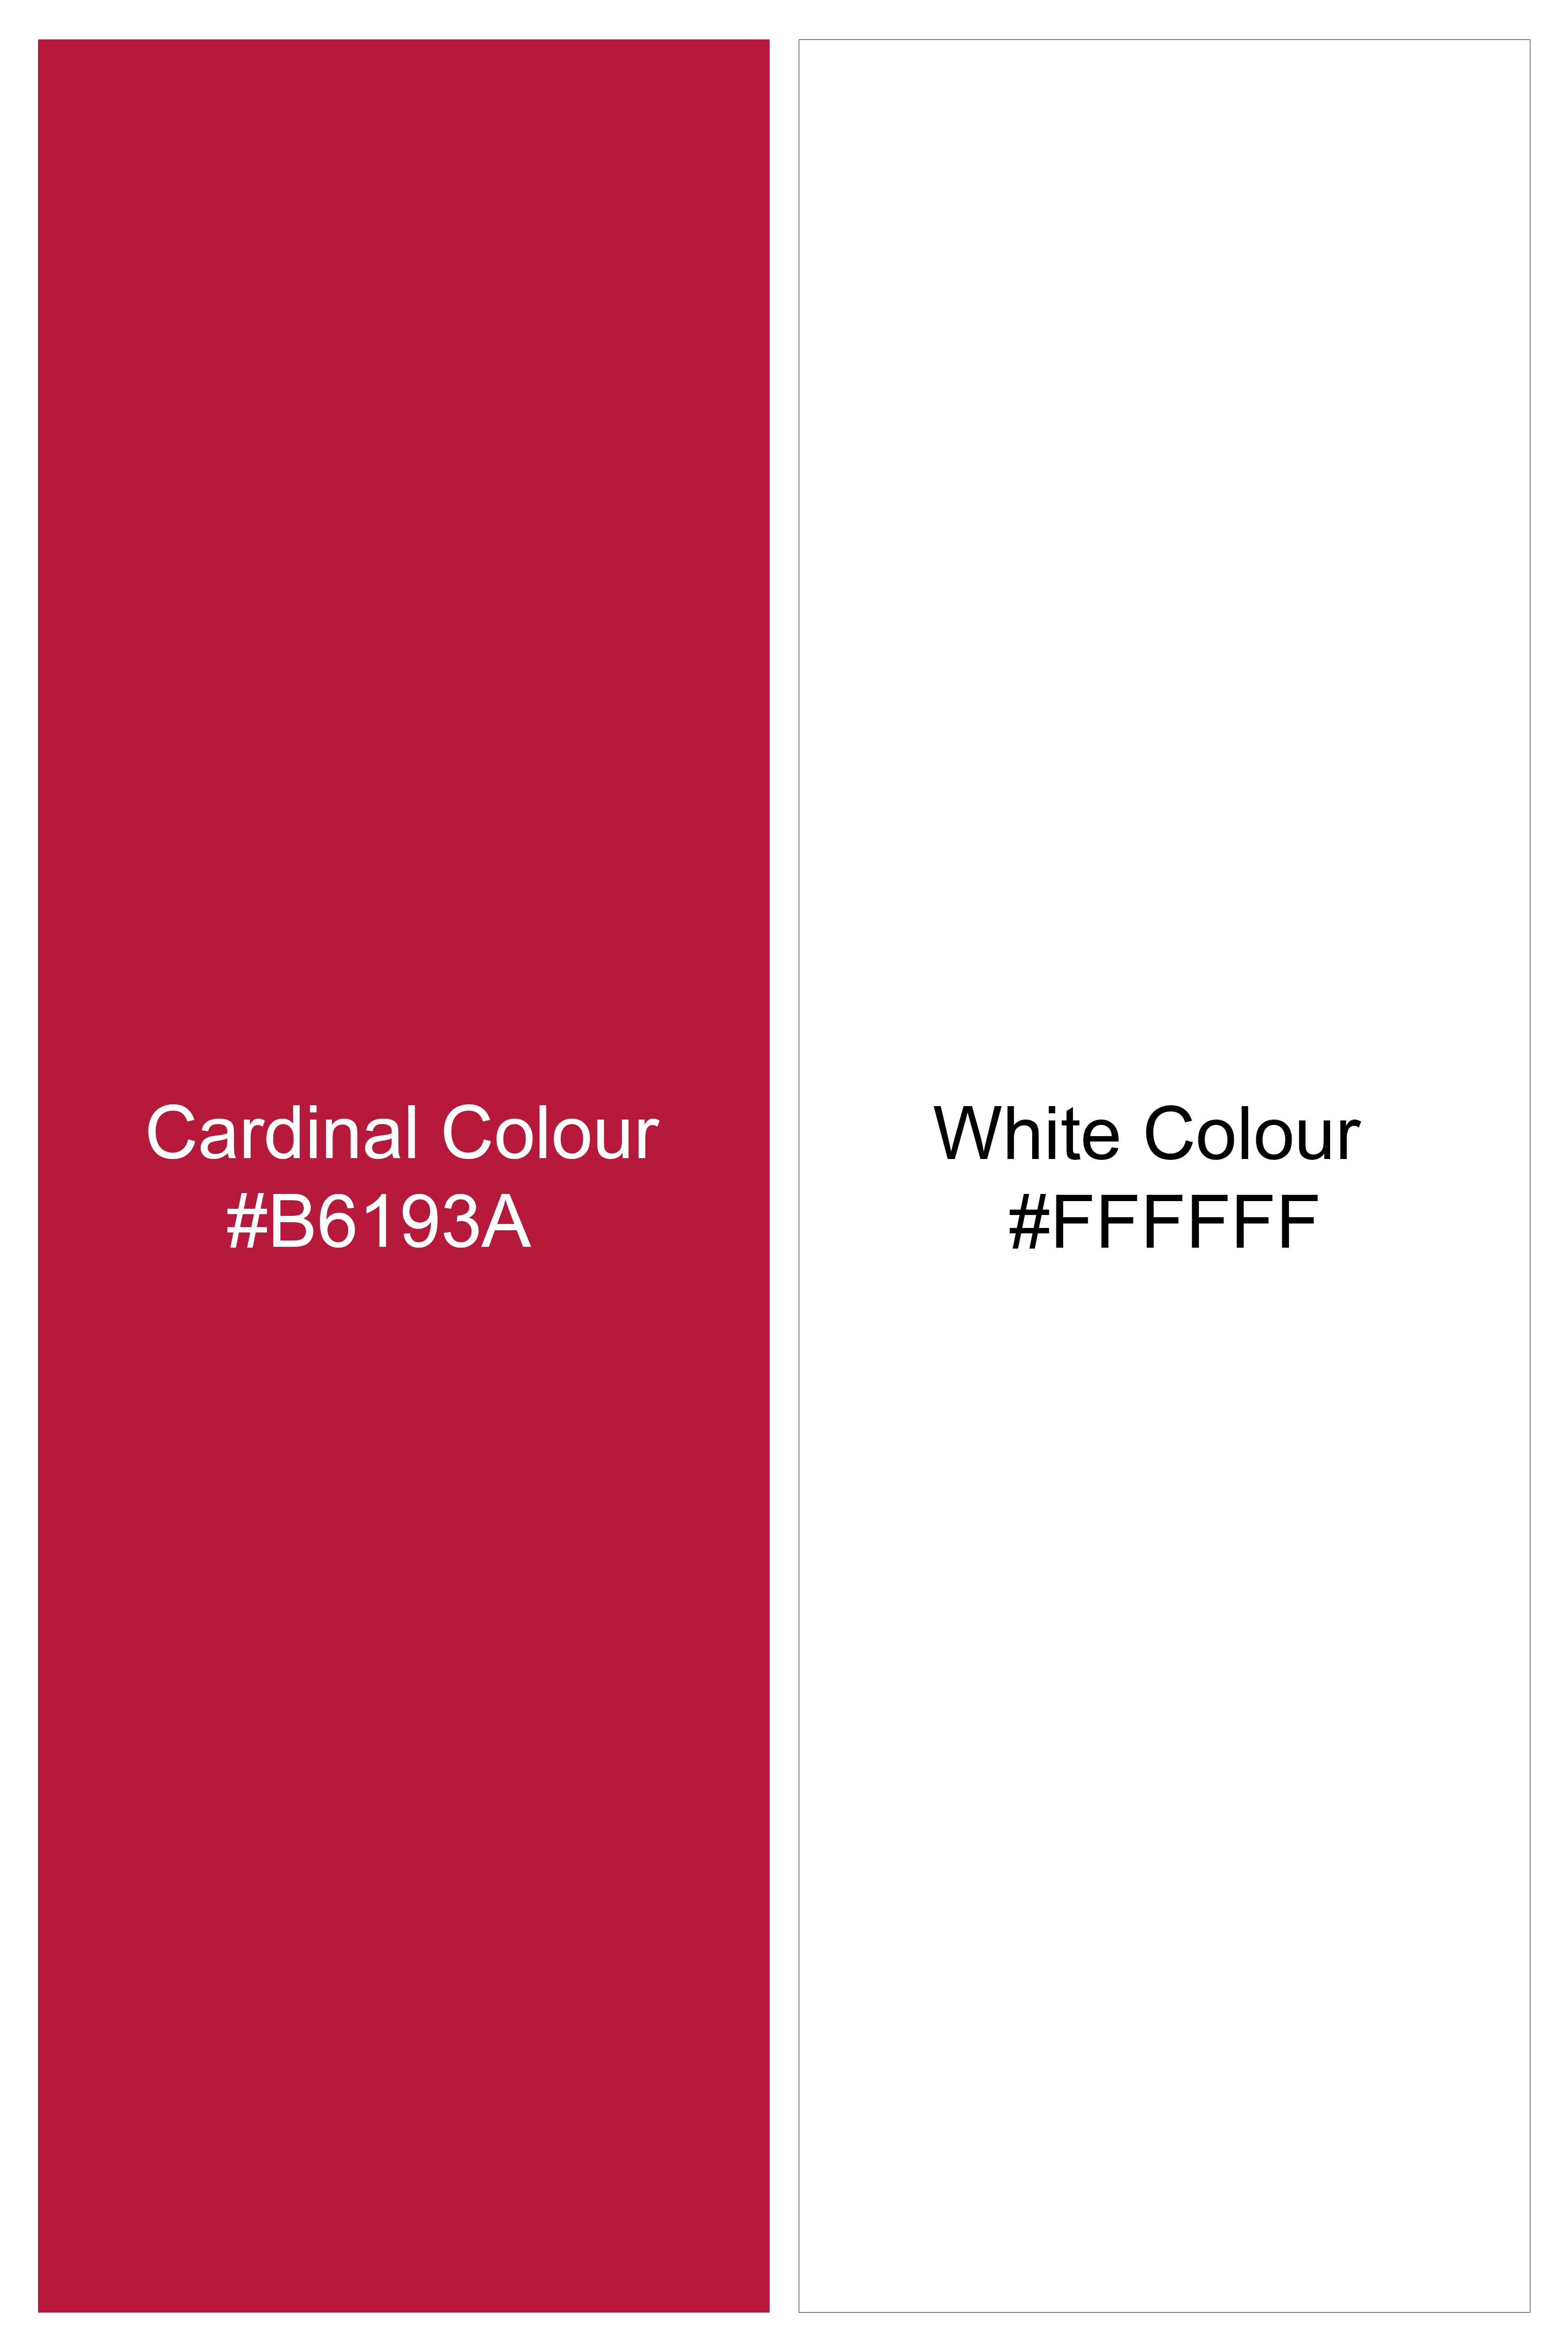 Cardinal Red with White Checkered Squirrel Patchwork Dobby Premium Giza Cotton Designer Shirt